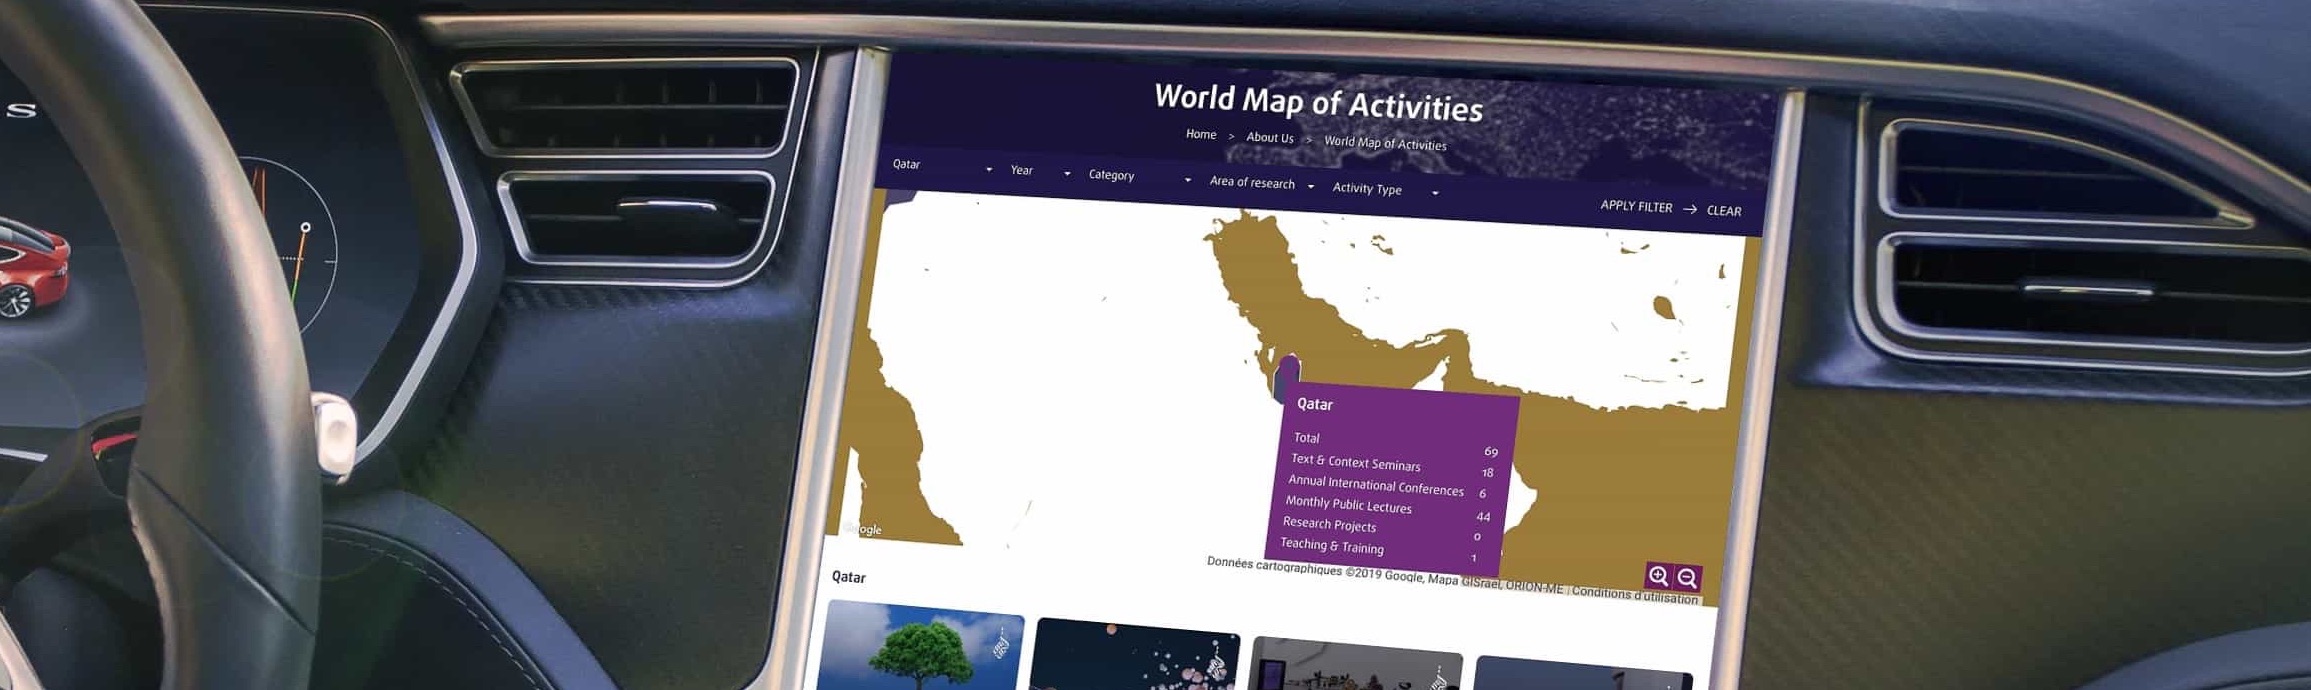 World Map Activities